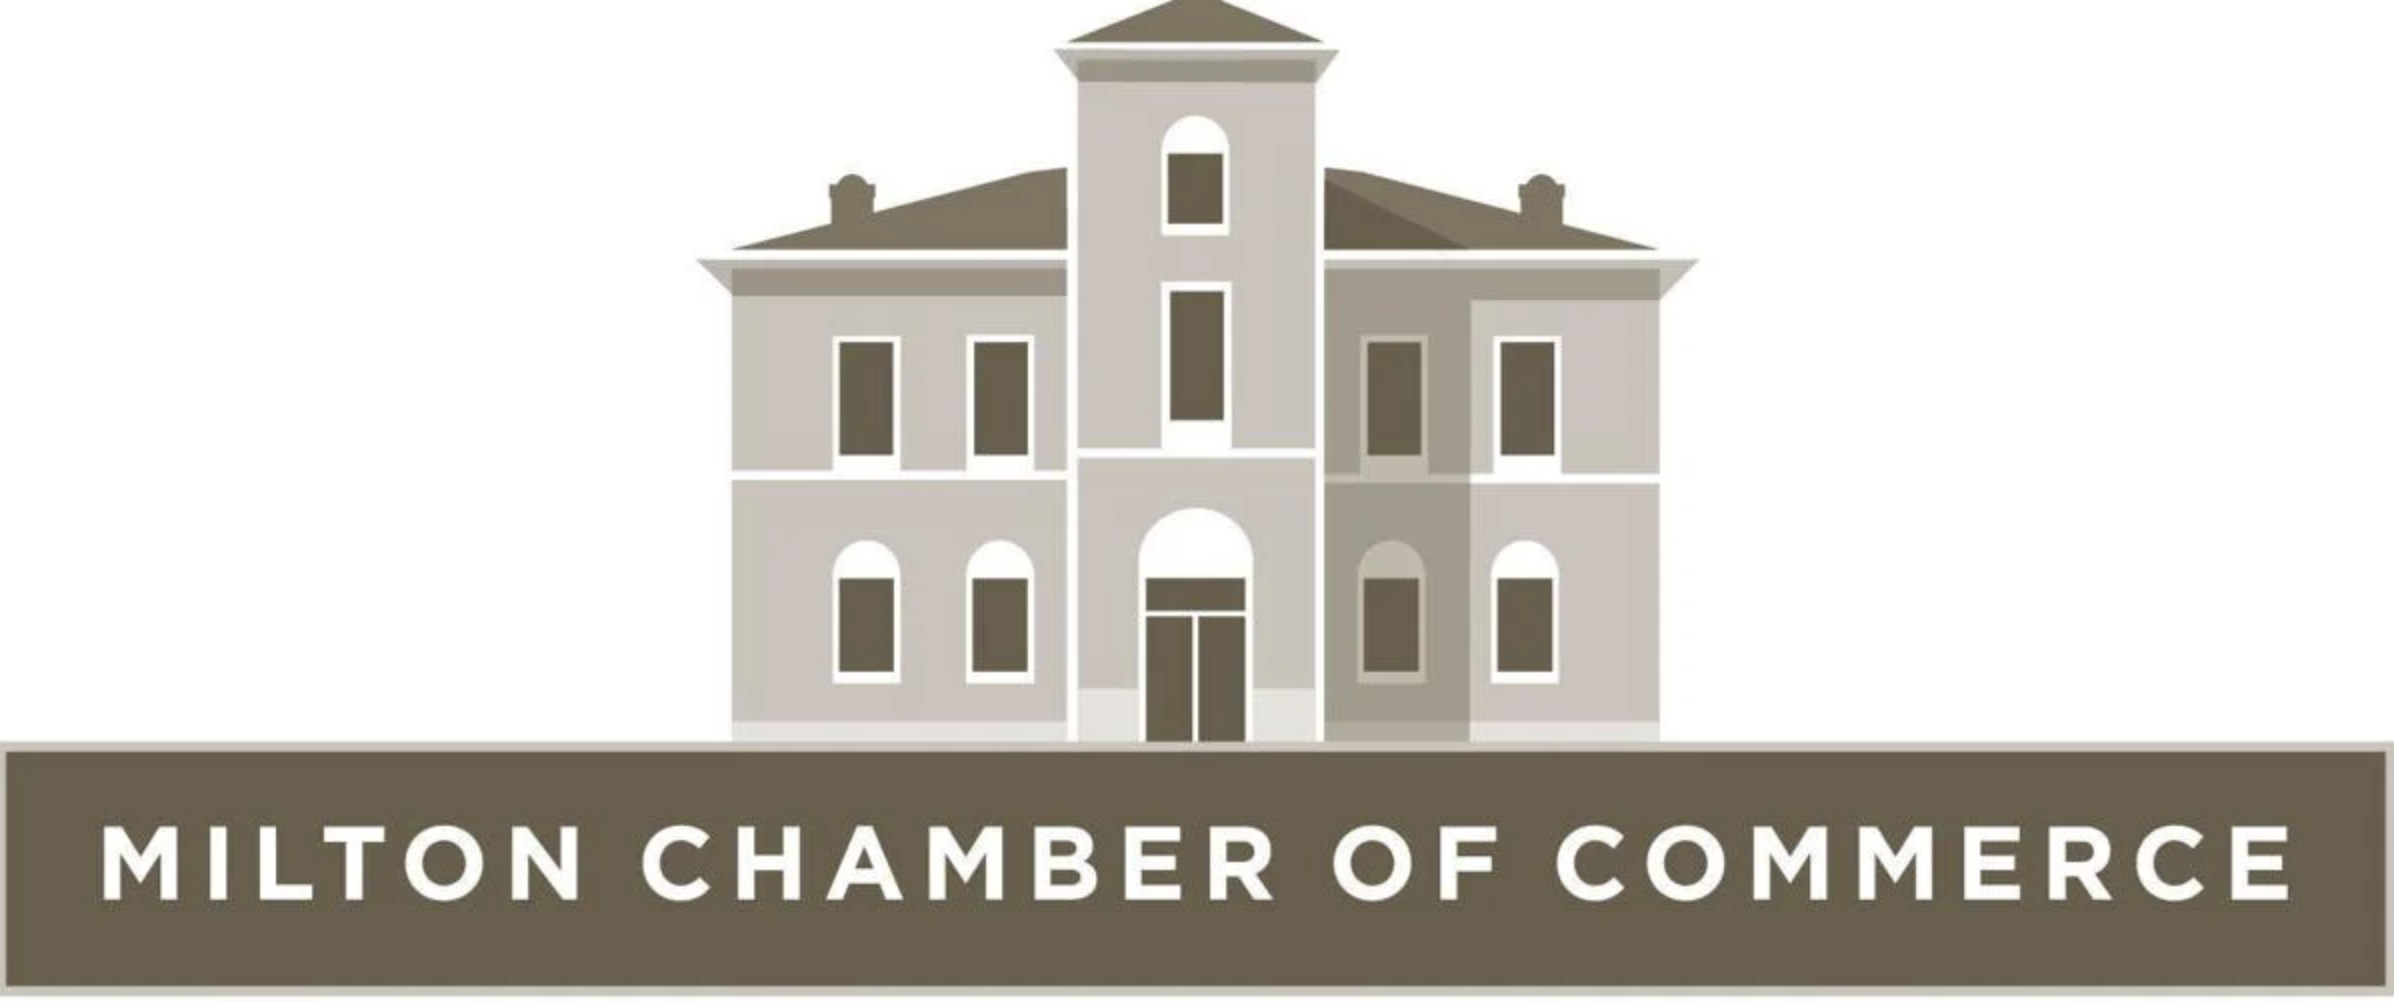  chamber of commerce milton